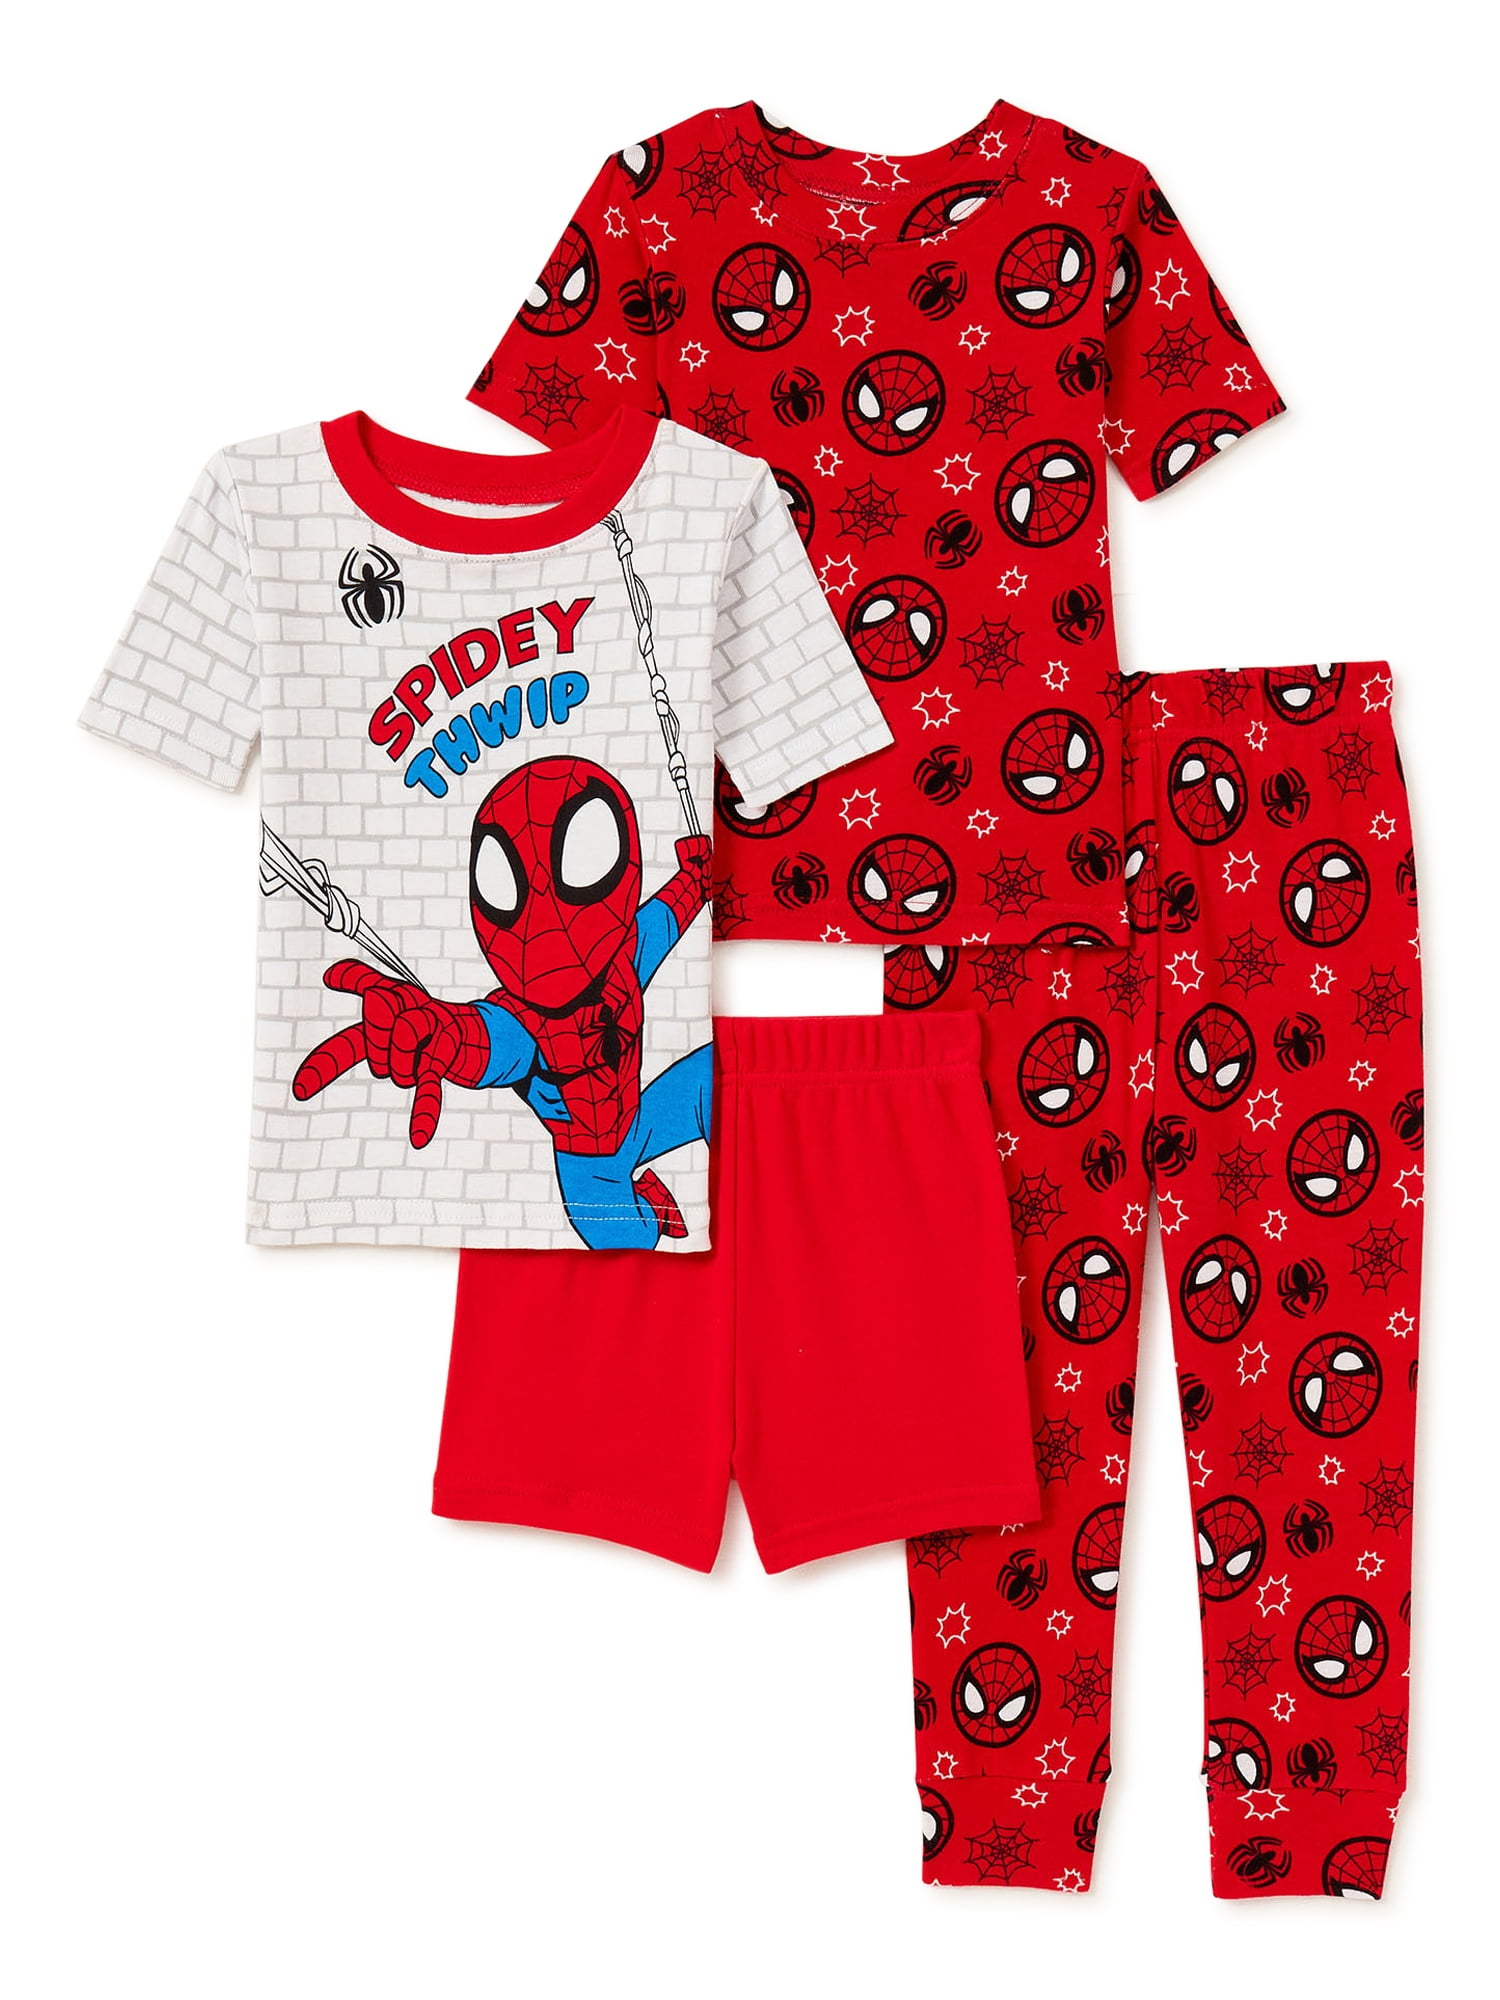 Details about   Marvel Spider-Man Toddler Boy Short Sleeve Shirt & Pants Pajamas New 12 Months 